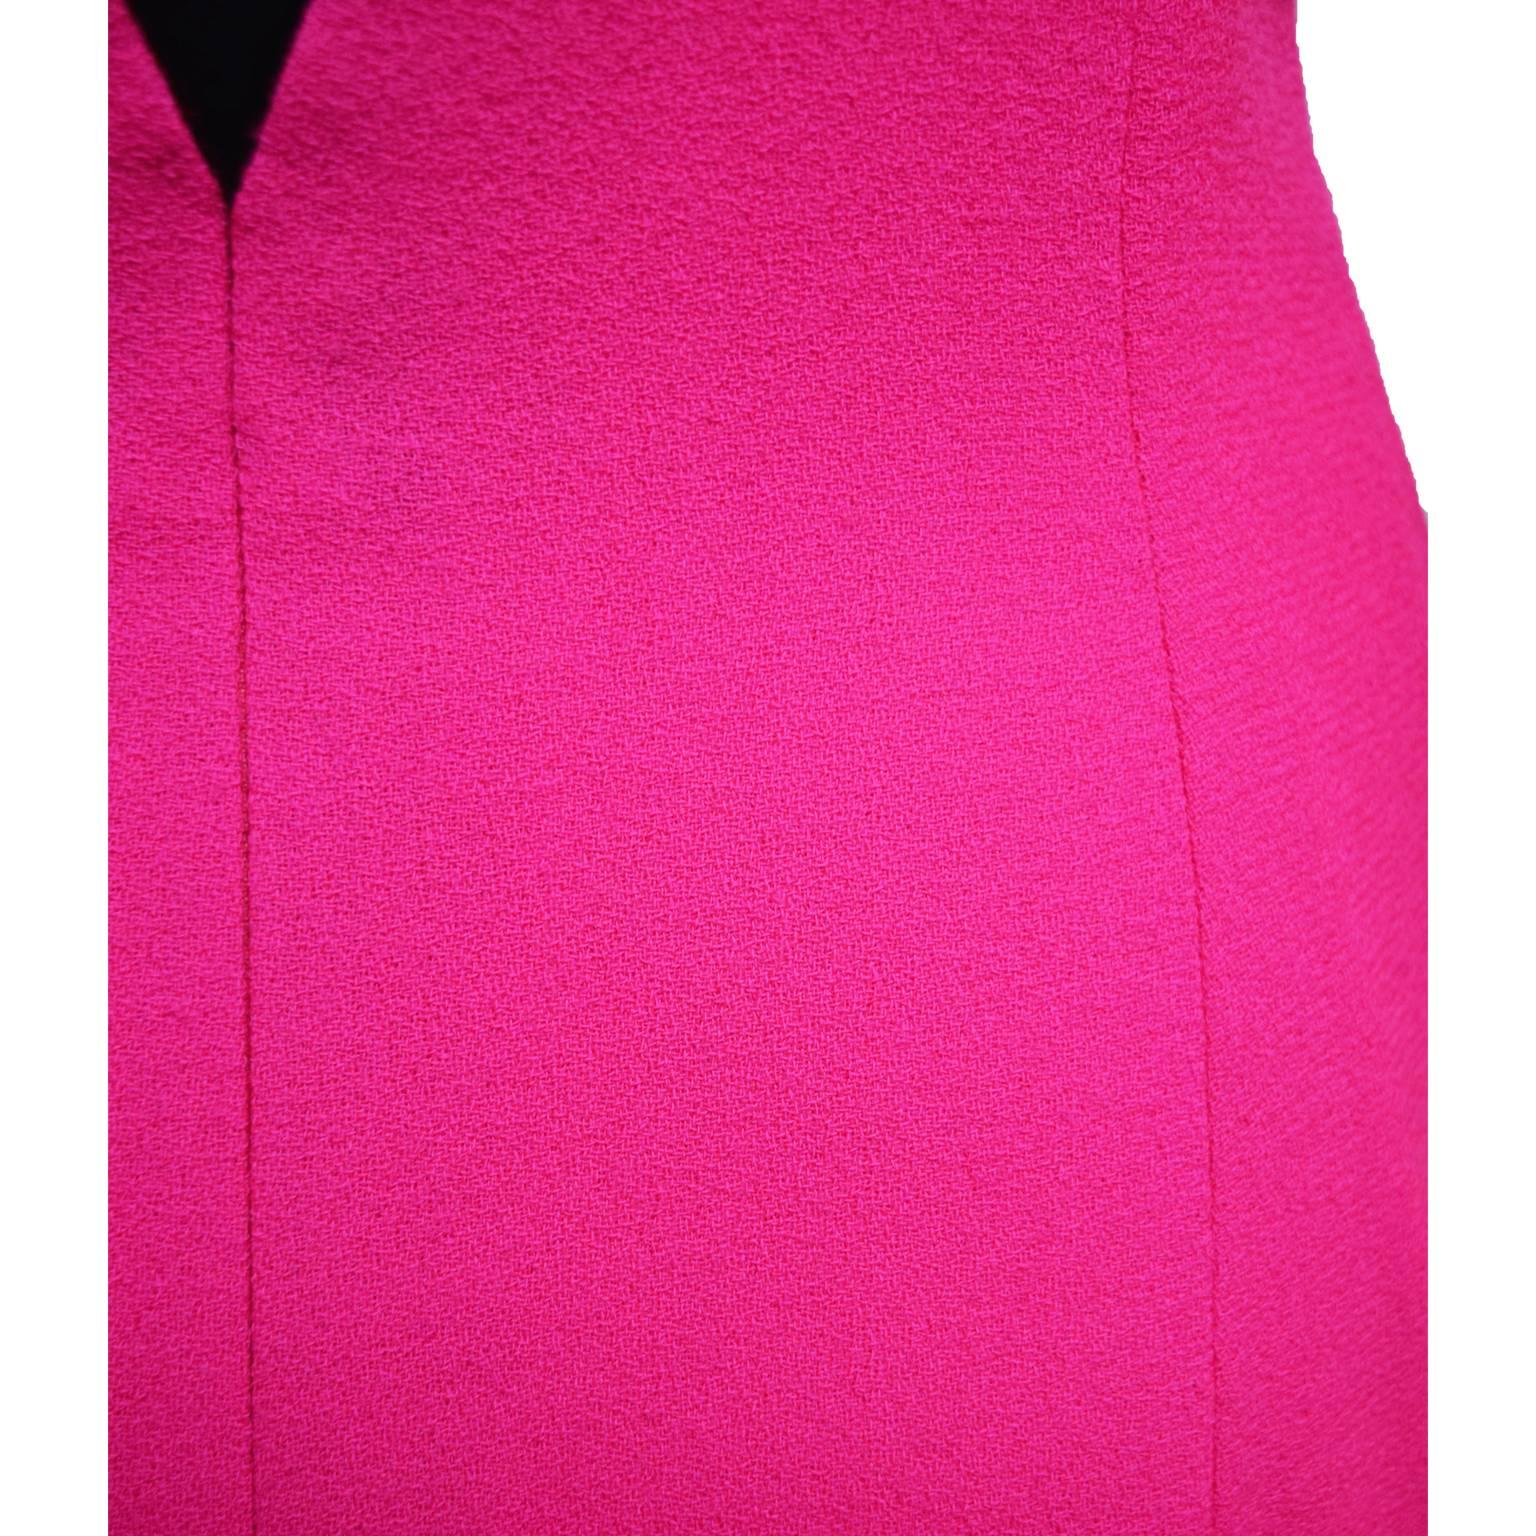 Pink Carolina Herrera Vintage Fuchsia and Black Velvet Sheath Dress with Tassels  For Sale